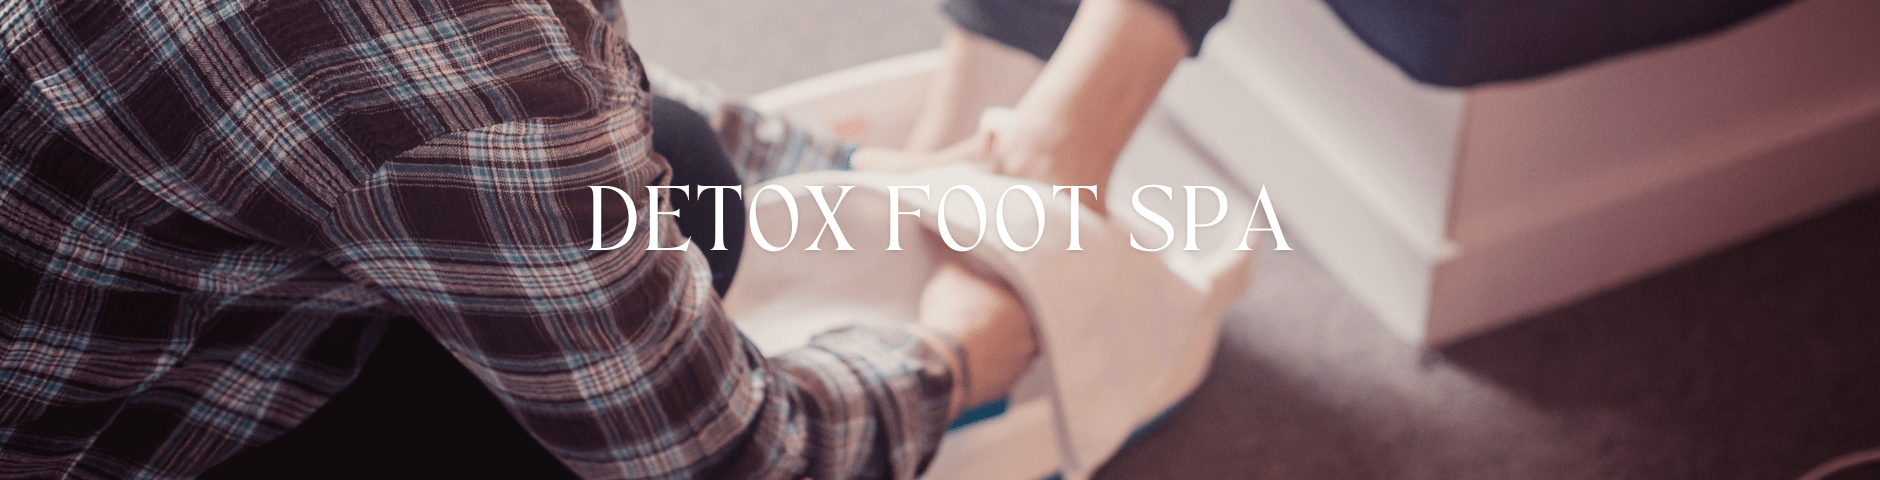 detox foot spa nettoyage toxines corps charleroi